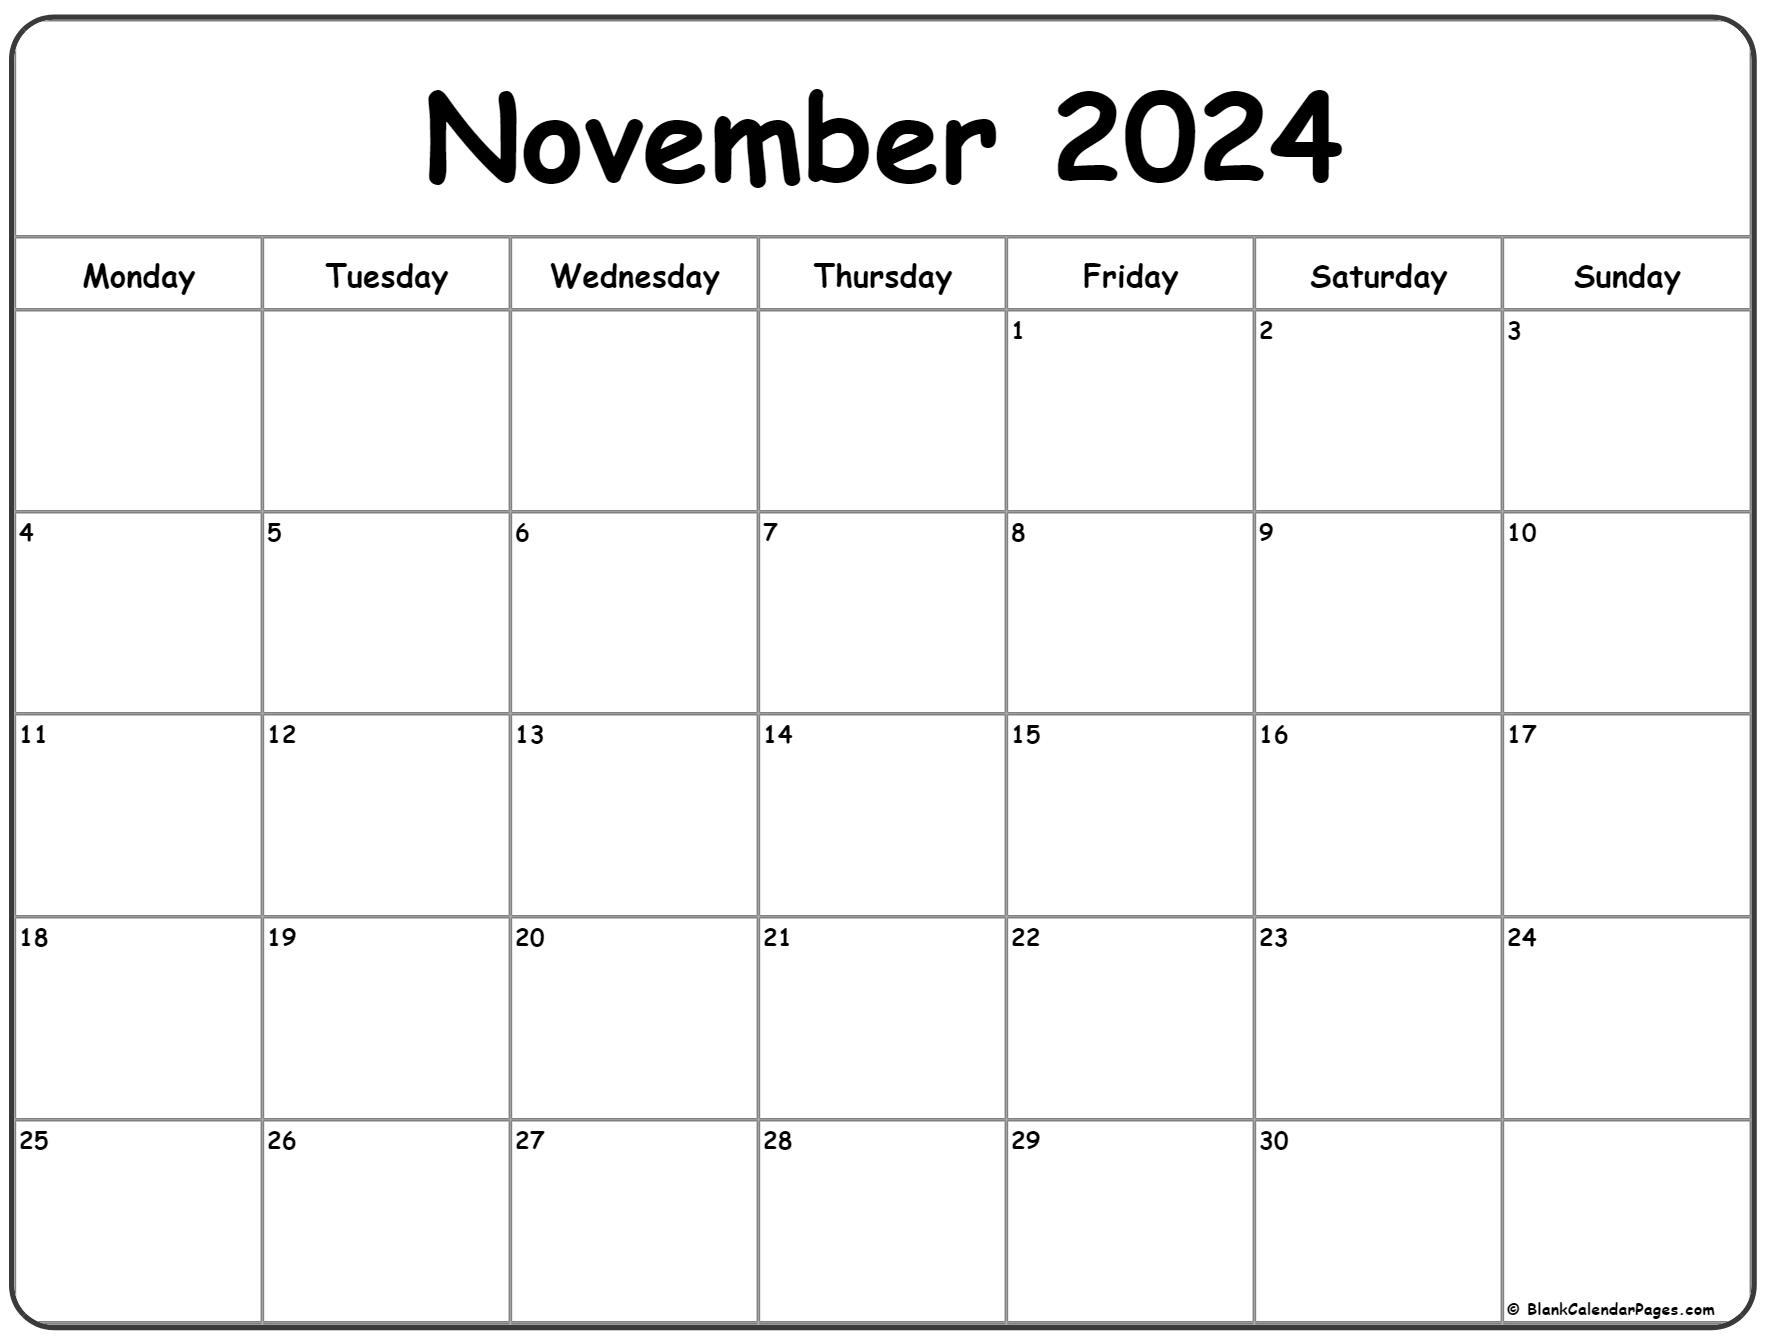 november-2019-monday-calendar-monday-to-sunday